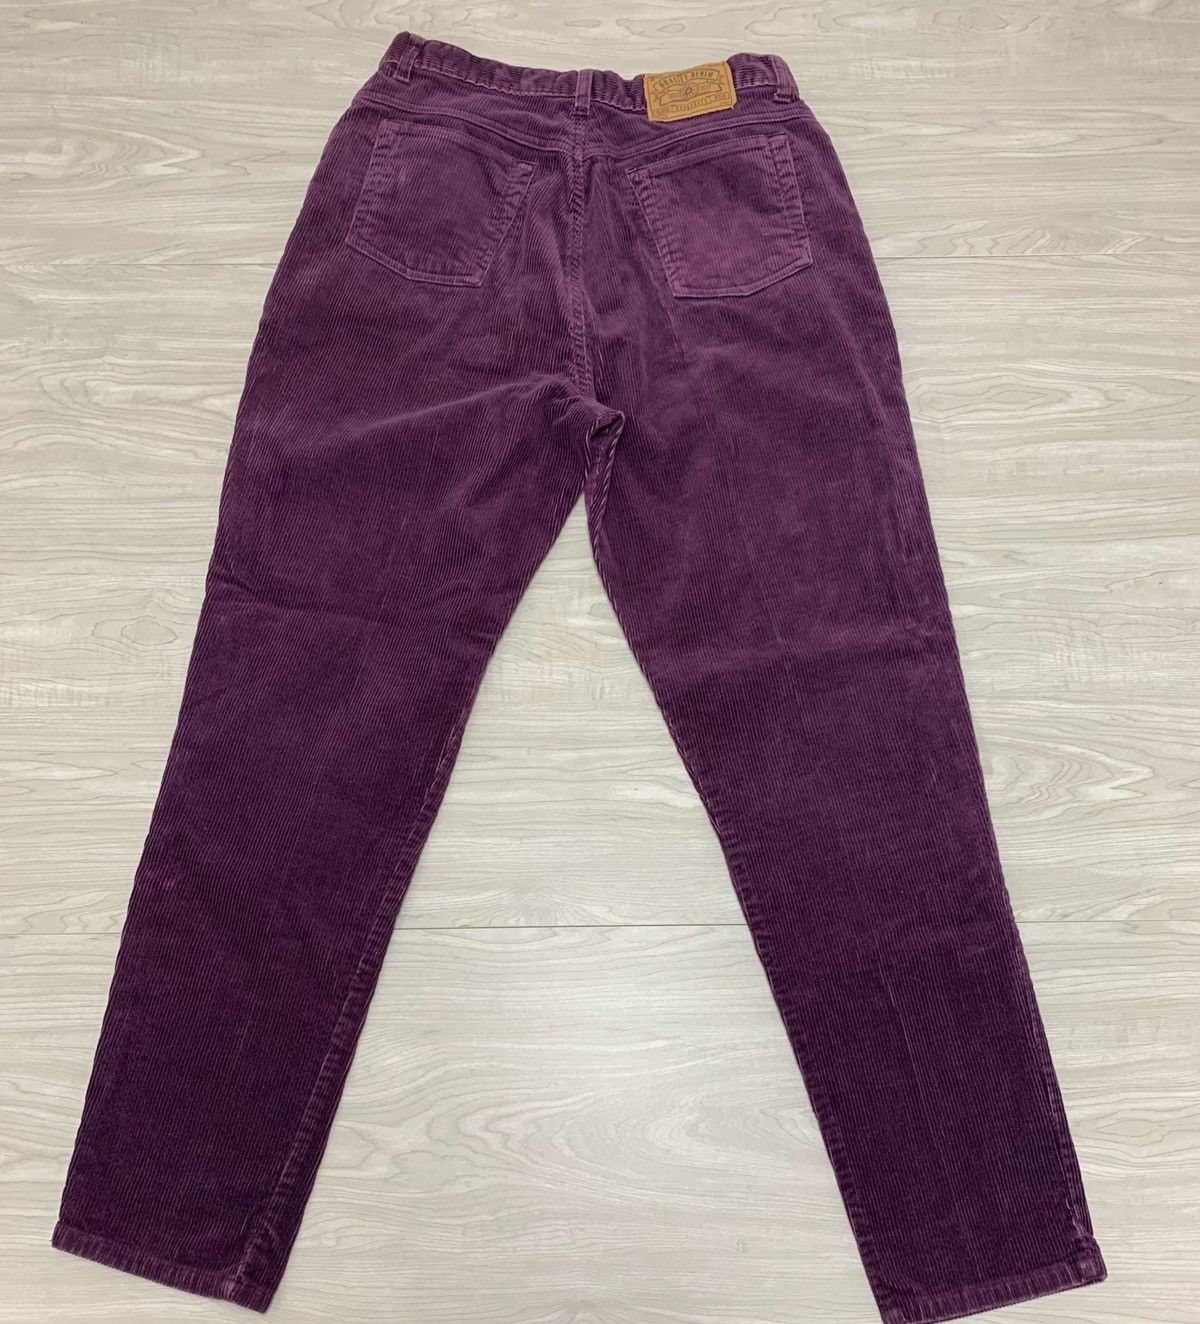 Vintage Vintage Purple Corduroy pants 30x30 Size US 30 / EU 46 - 3 Thumbnail